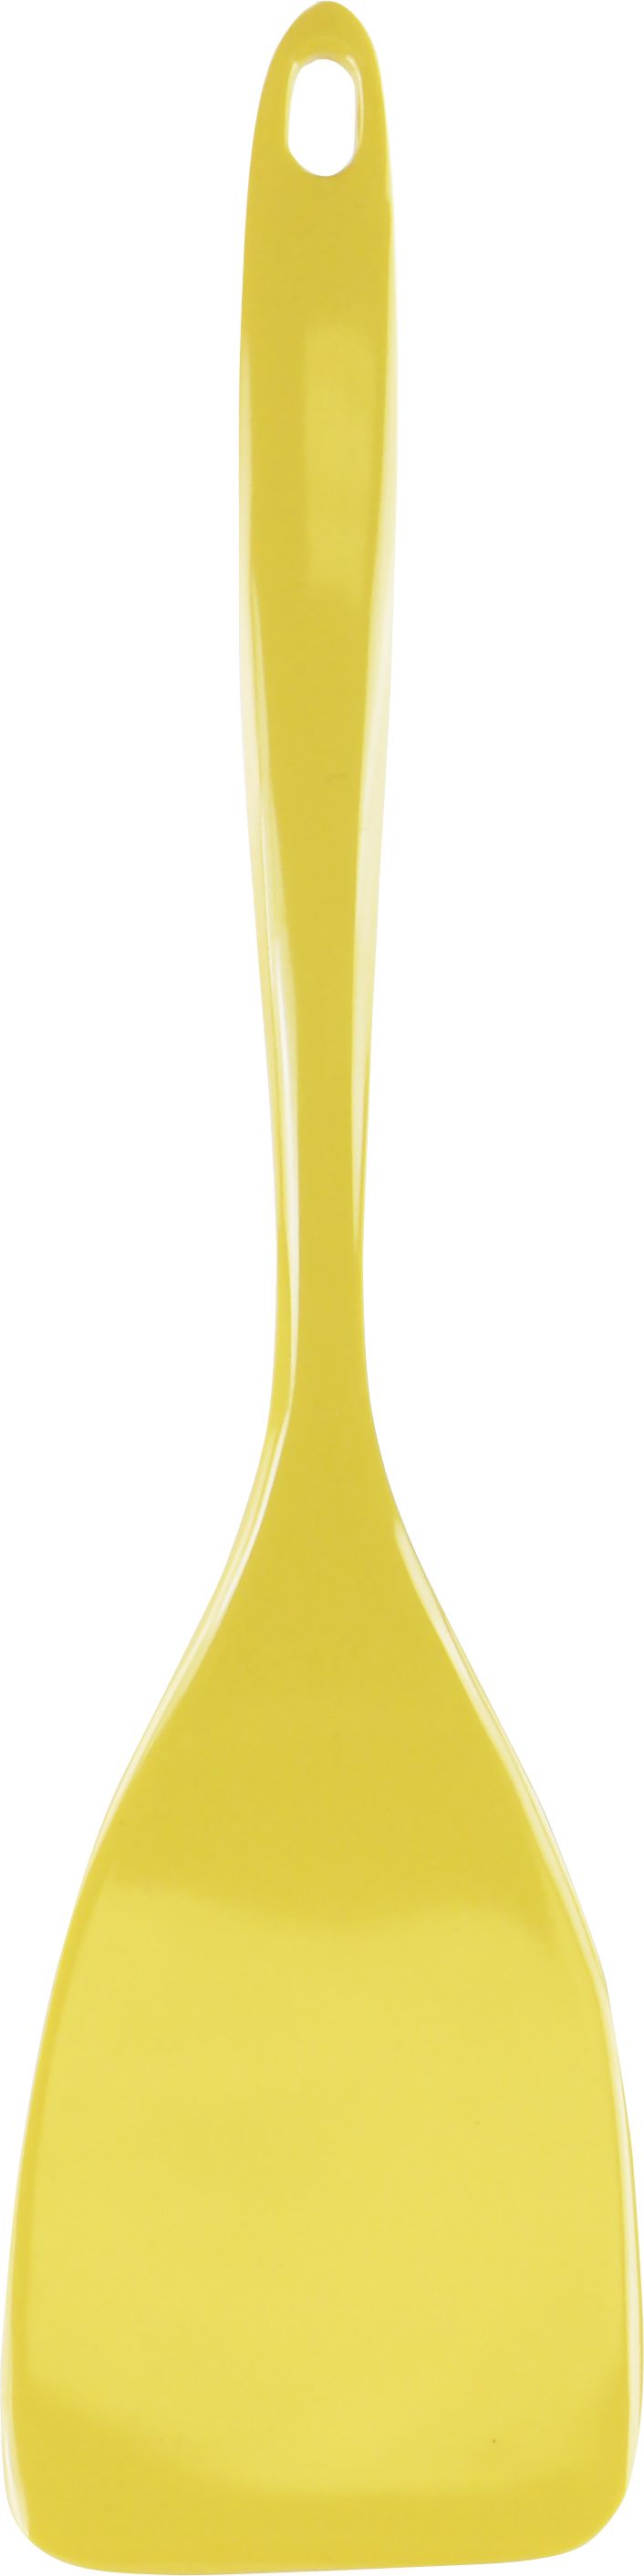 98421 Calypso Basics Melamine Spatula - Lemon